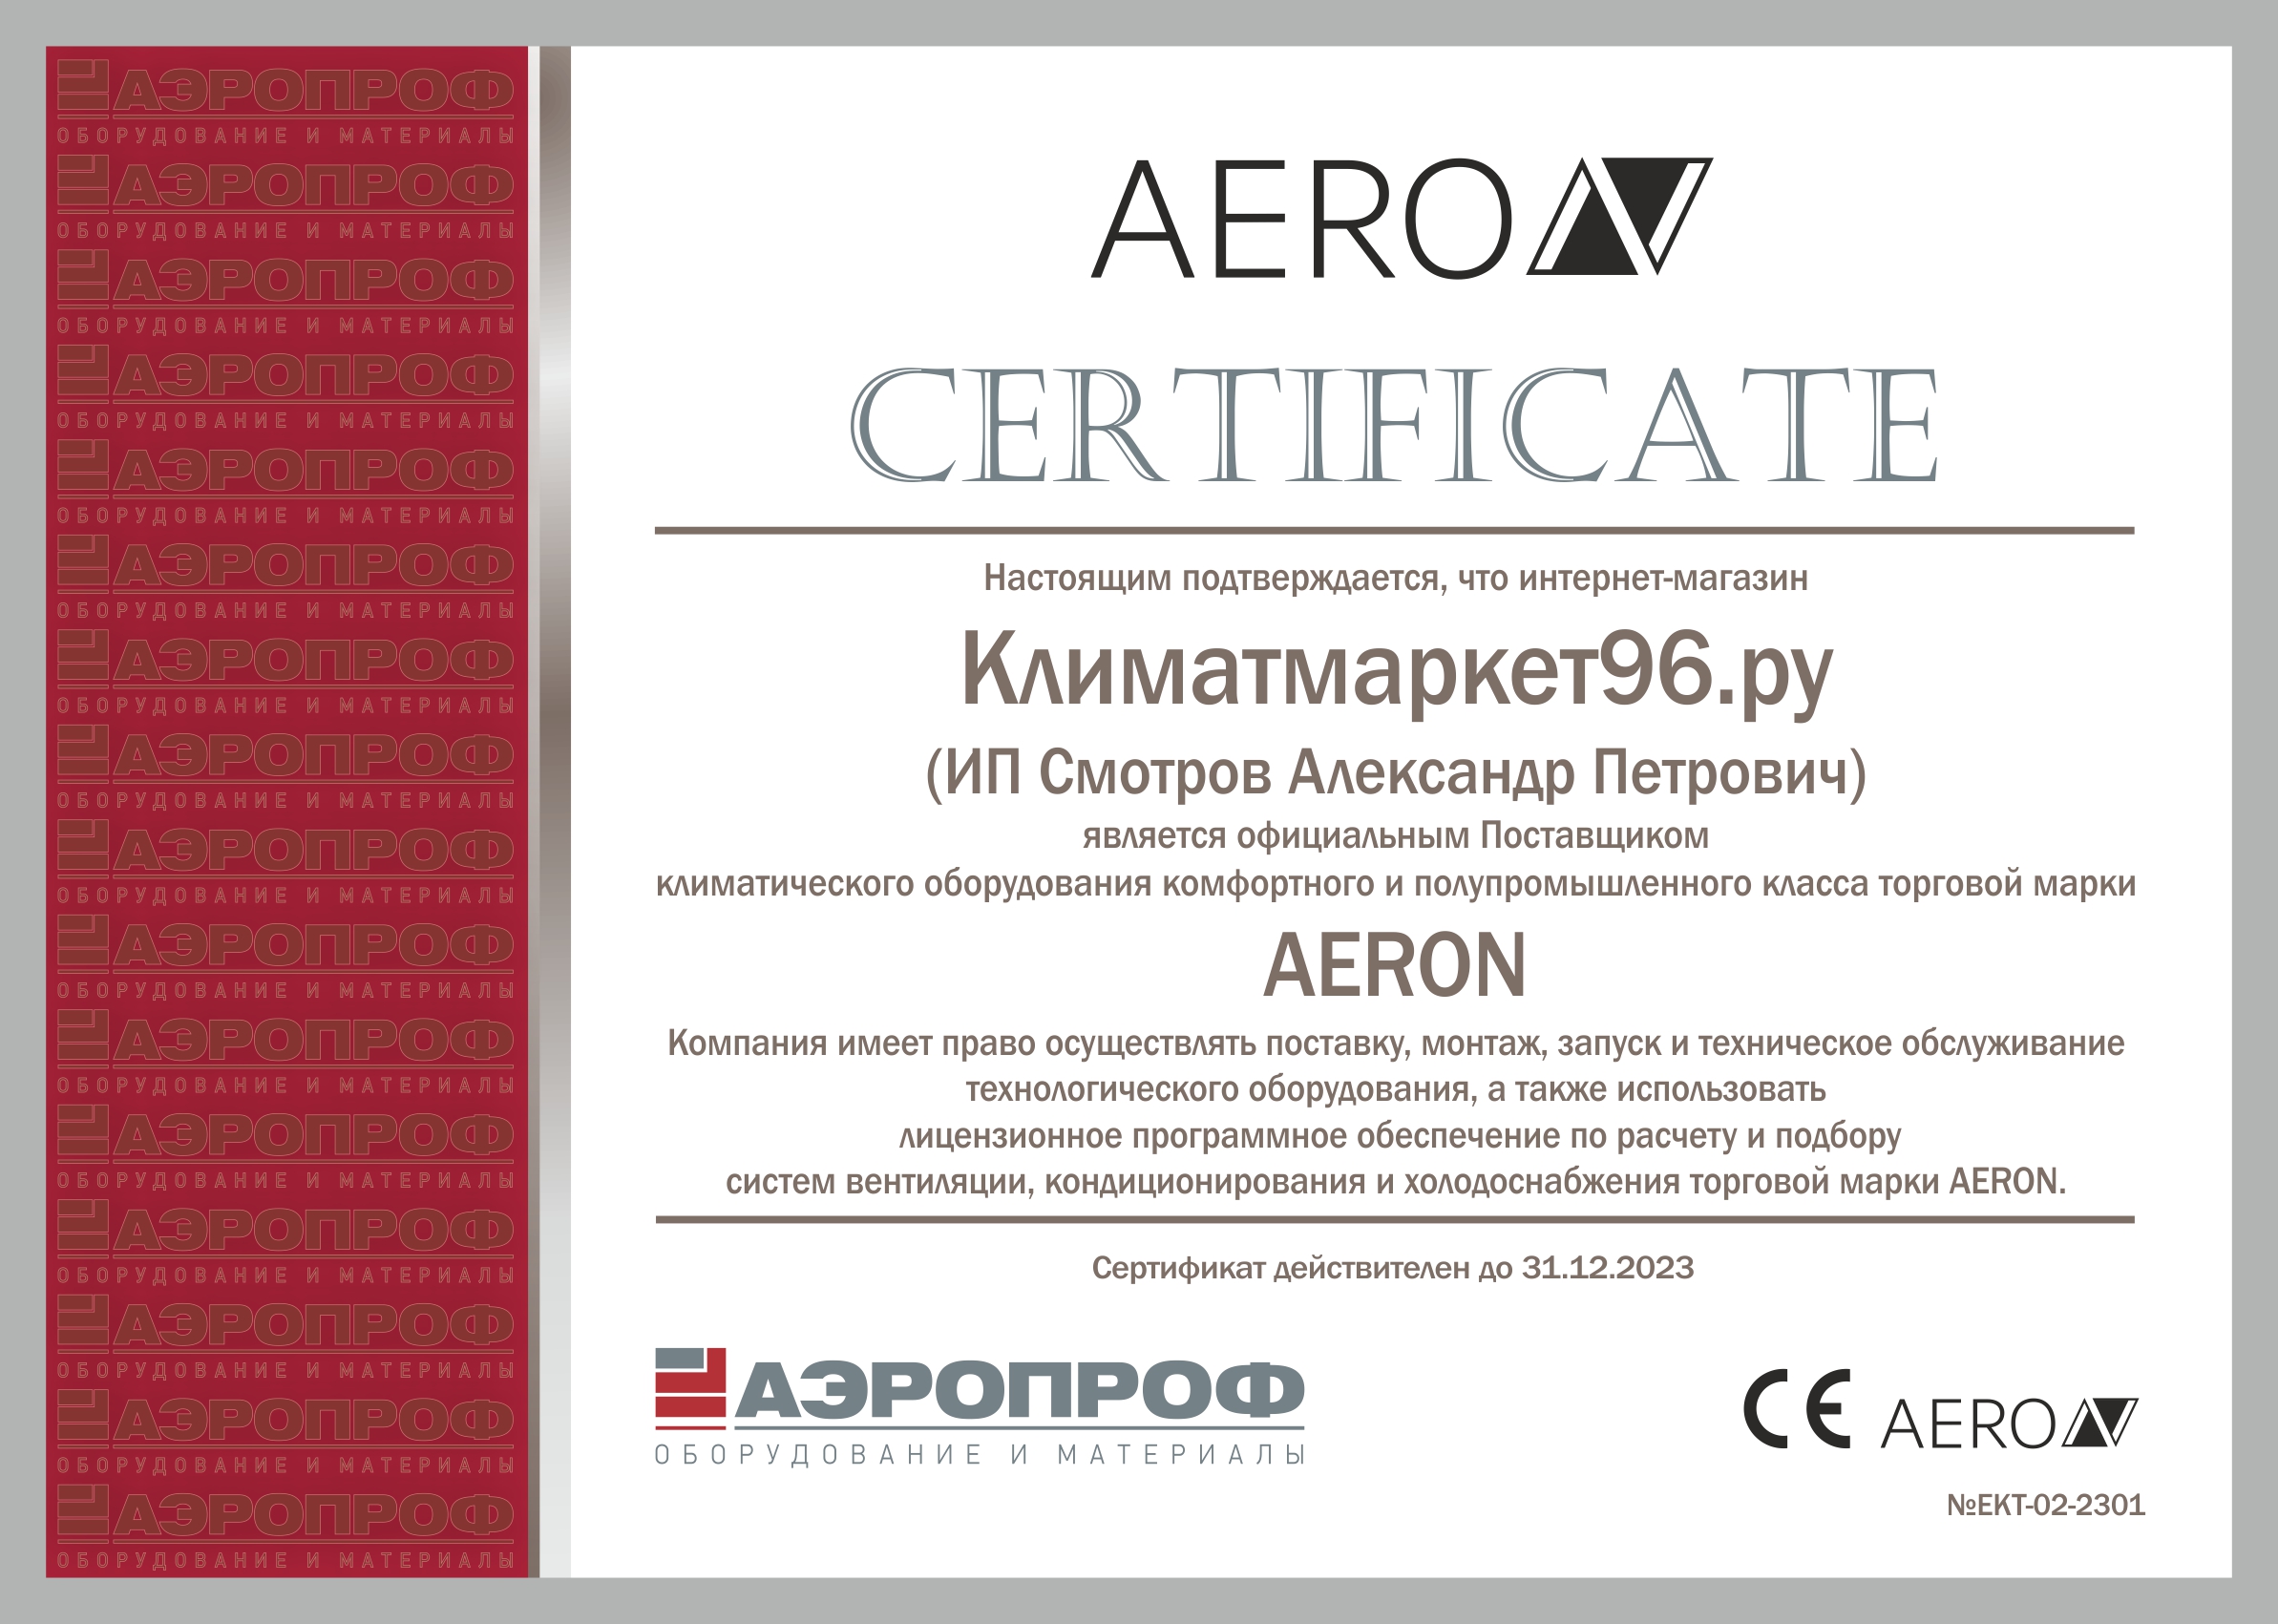 sert23-km96-aeron Kondicioner Aero ALRS-36IH3A-02/ALRS-36OH3A-02 kypit v Ekaterinbyrge v internet-magazine KlimatMarket96.ry Сертификат официального дилера